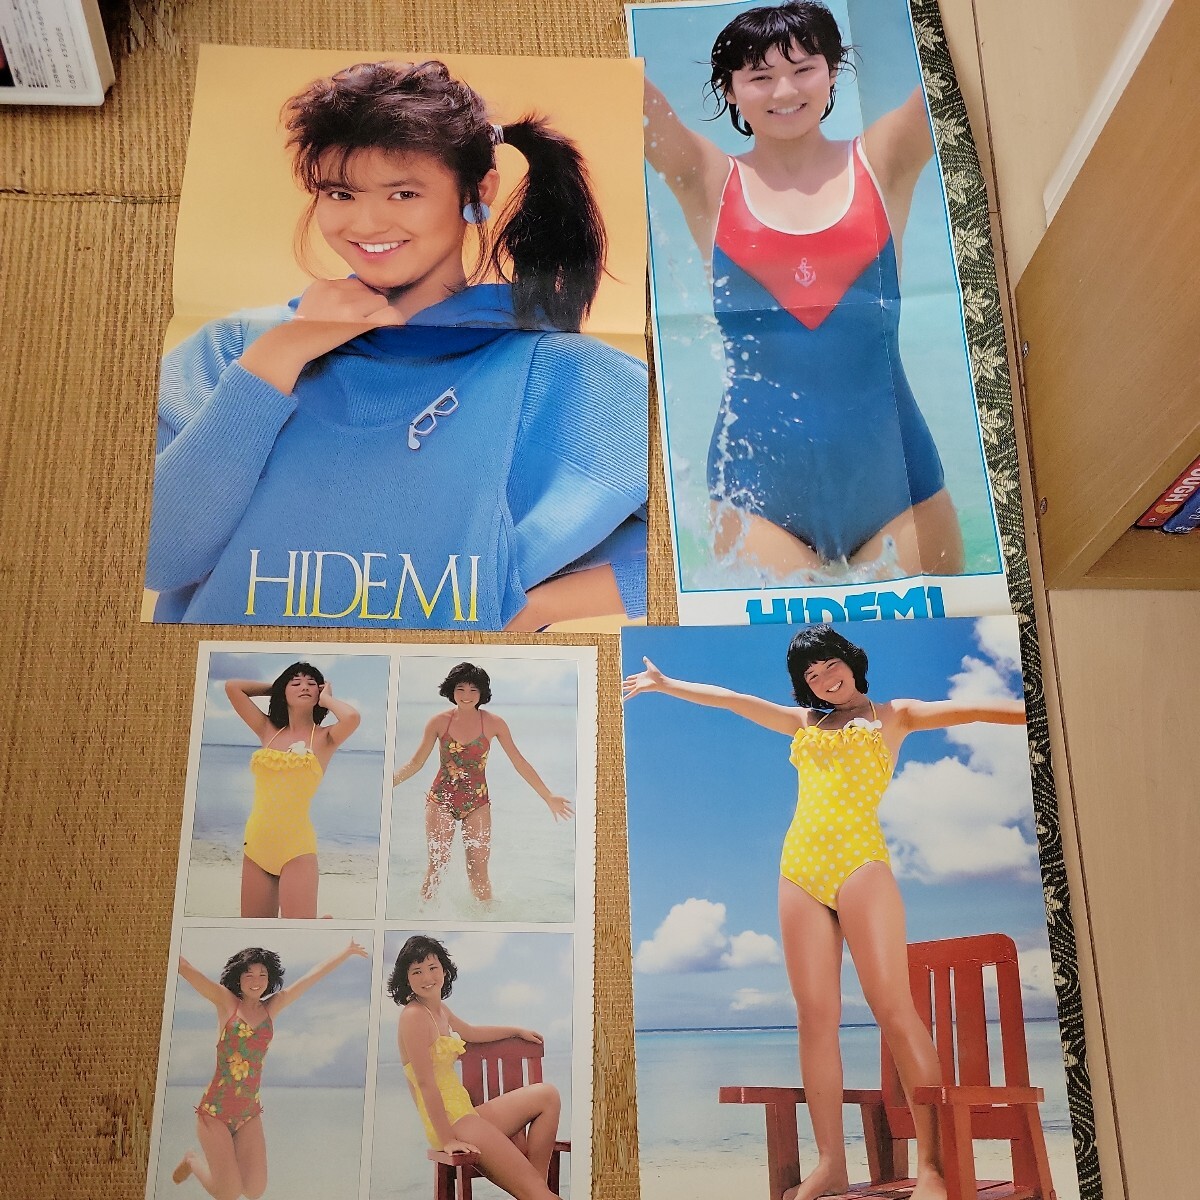  Ishikawa Hidemi купальный костюм постер вырезки Showa идол 